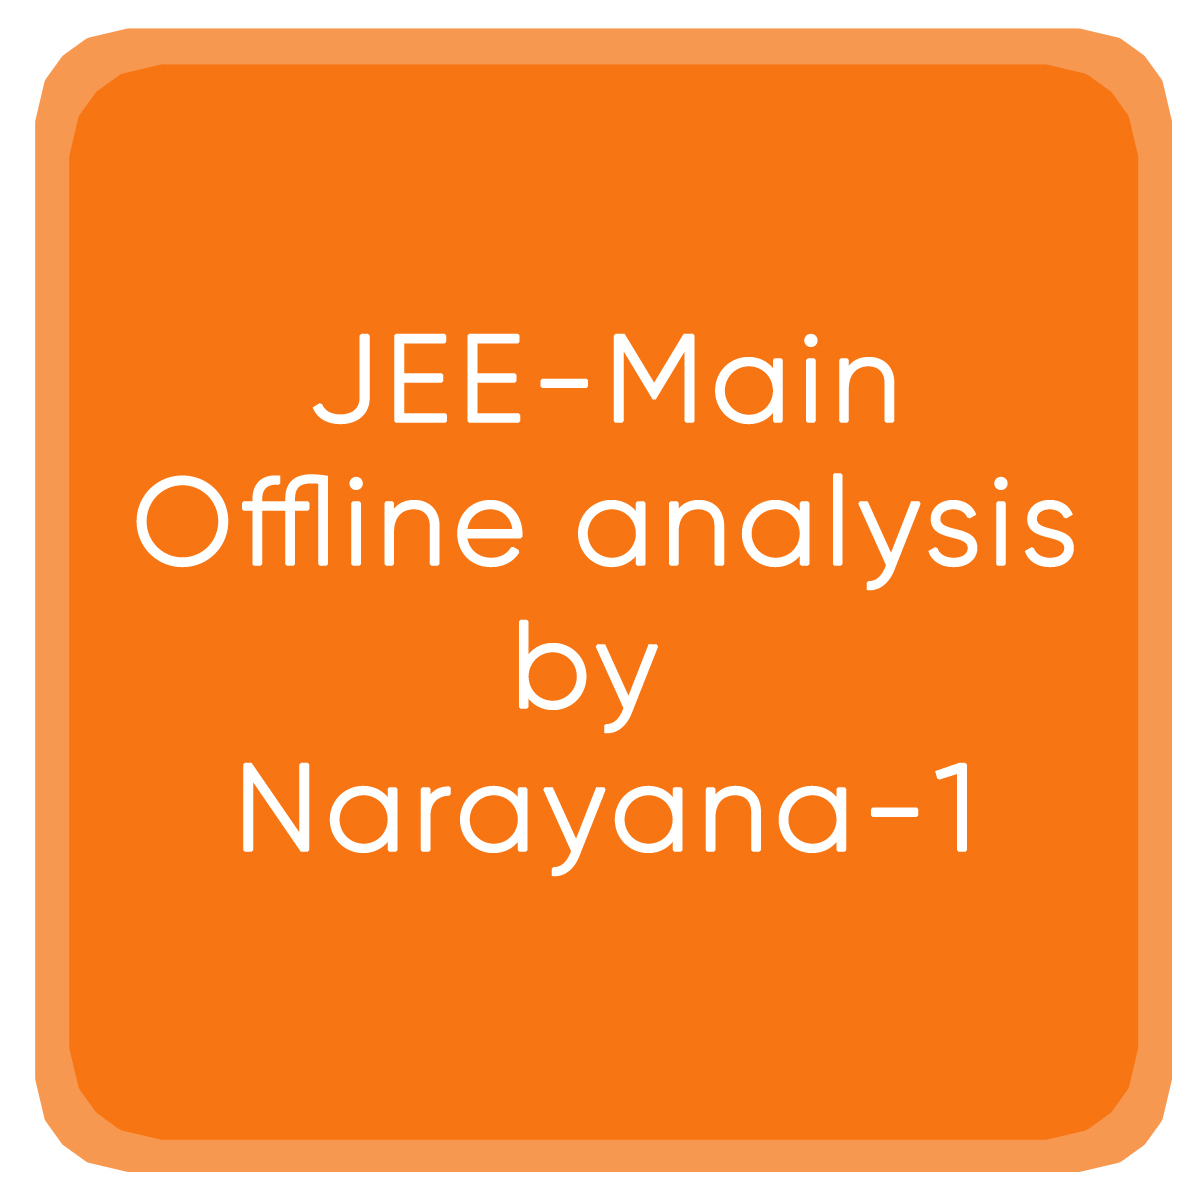 JEE-Main-Offline-analysis-by Narayana-1